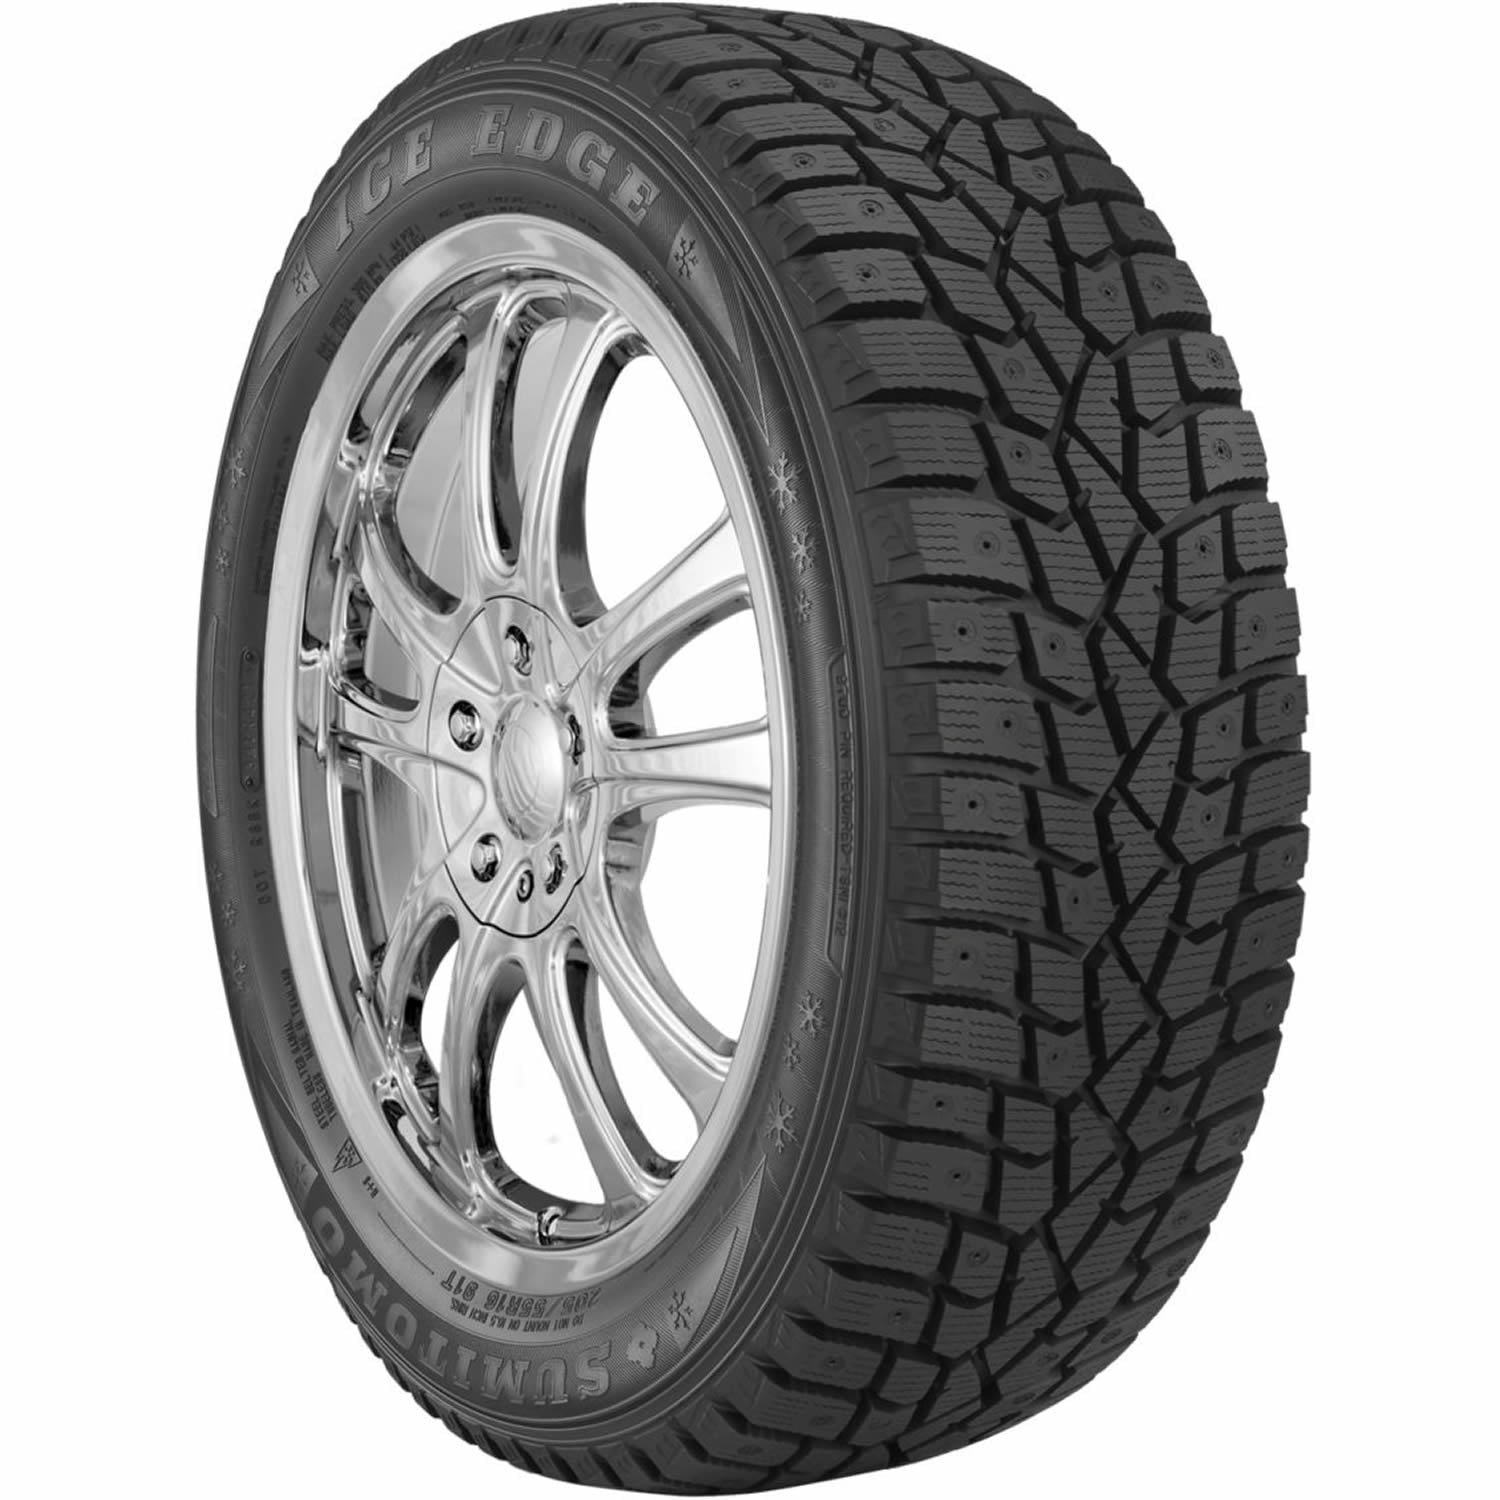 SUMITOMO ICE EDGE 225/55R17 (27X9R 17) Tires